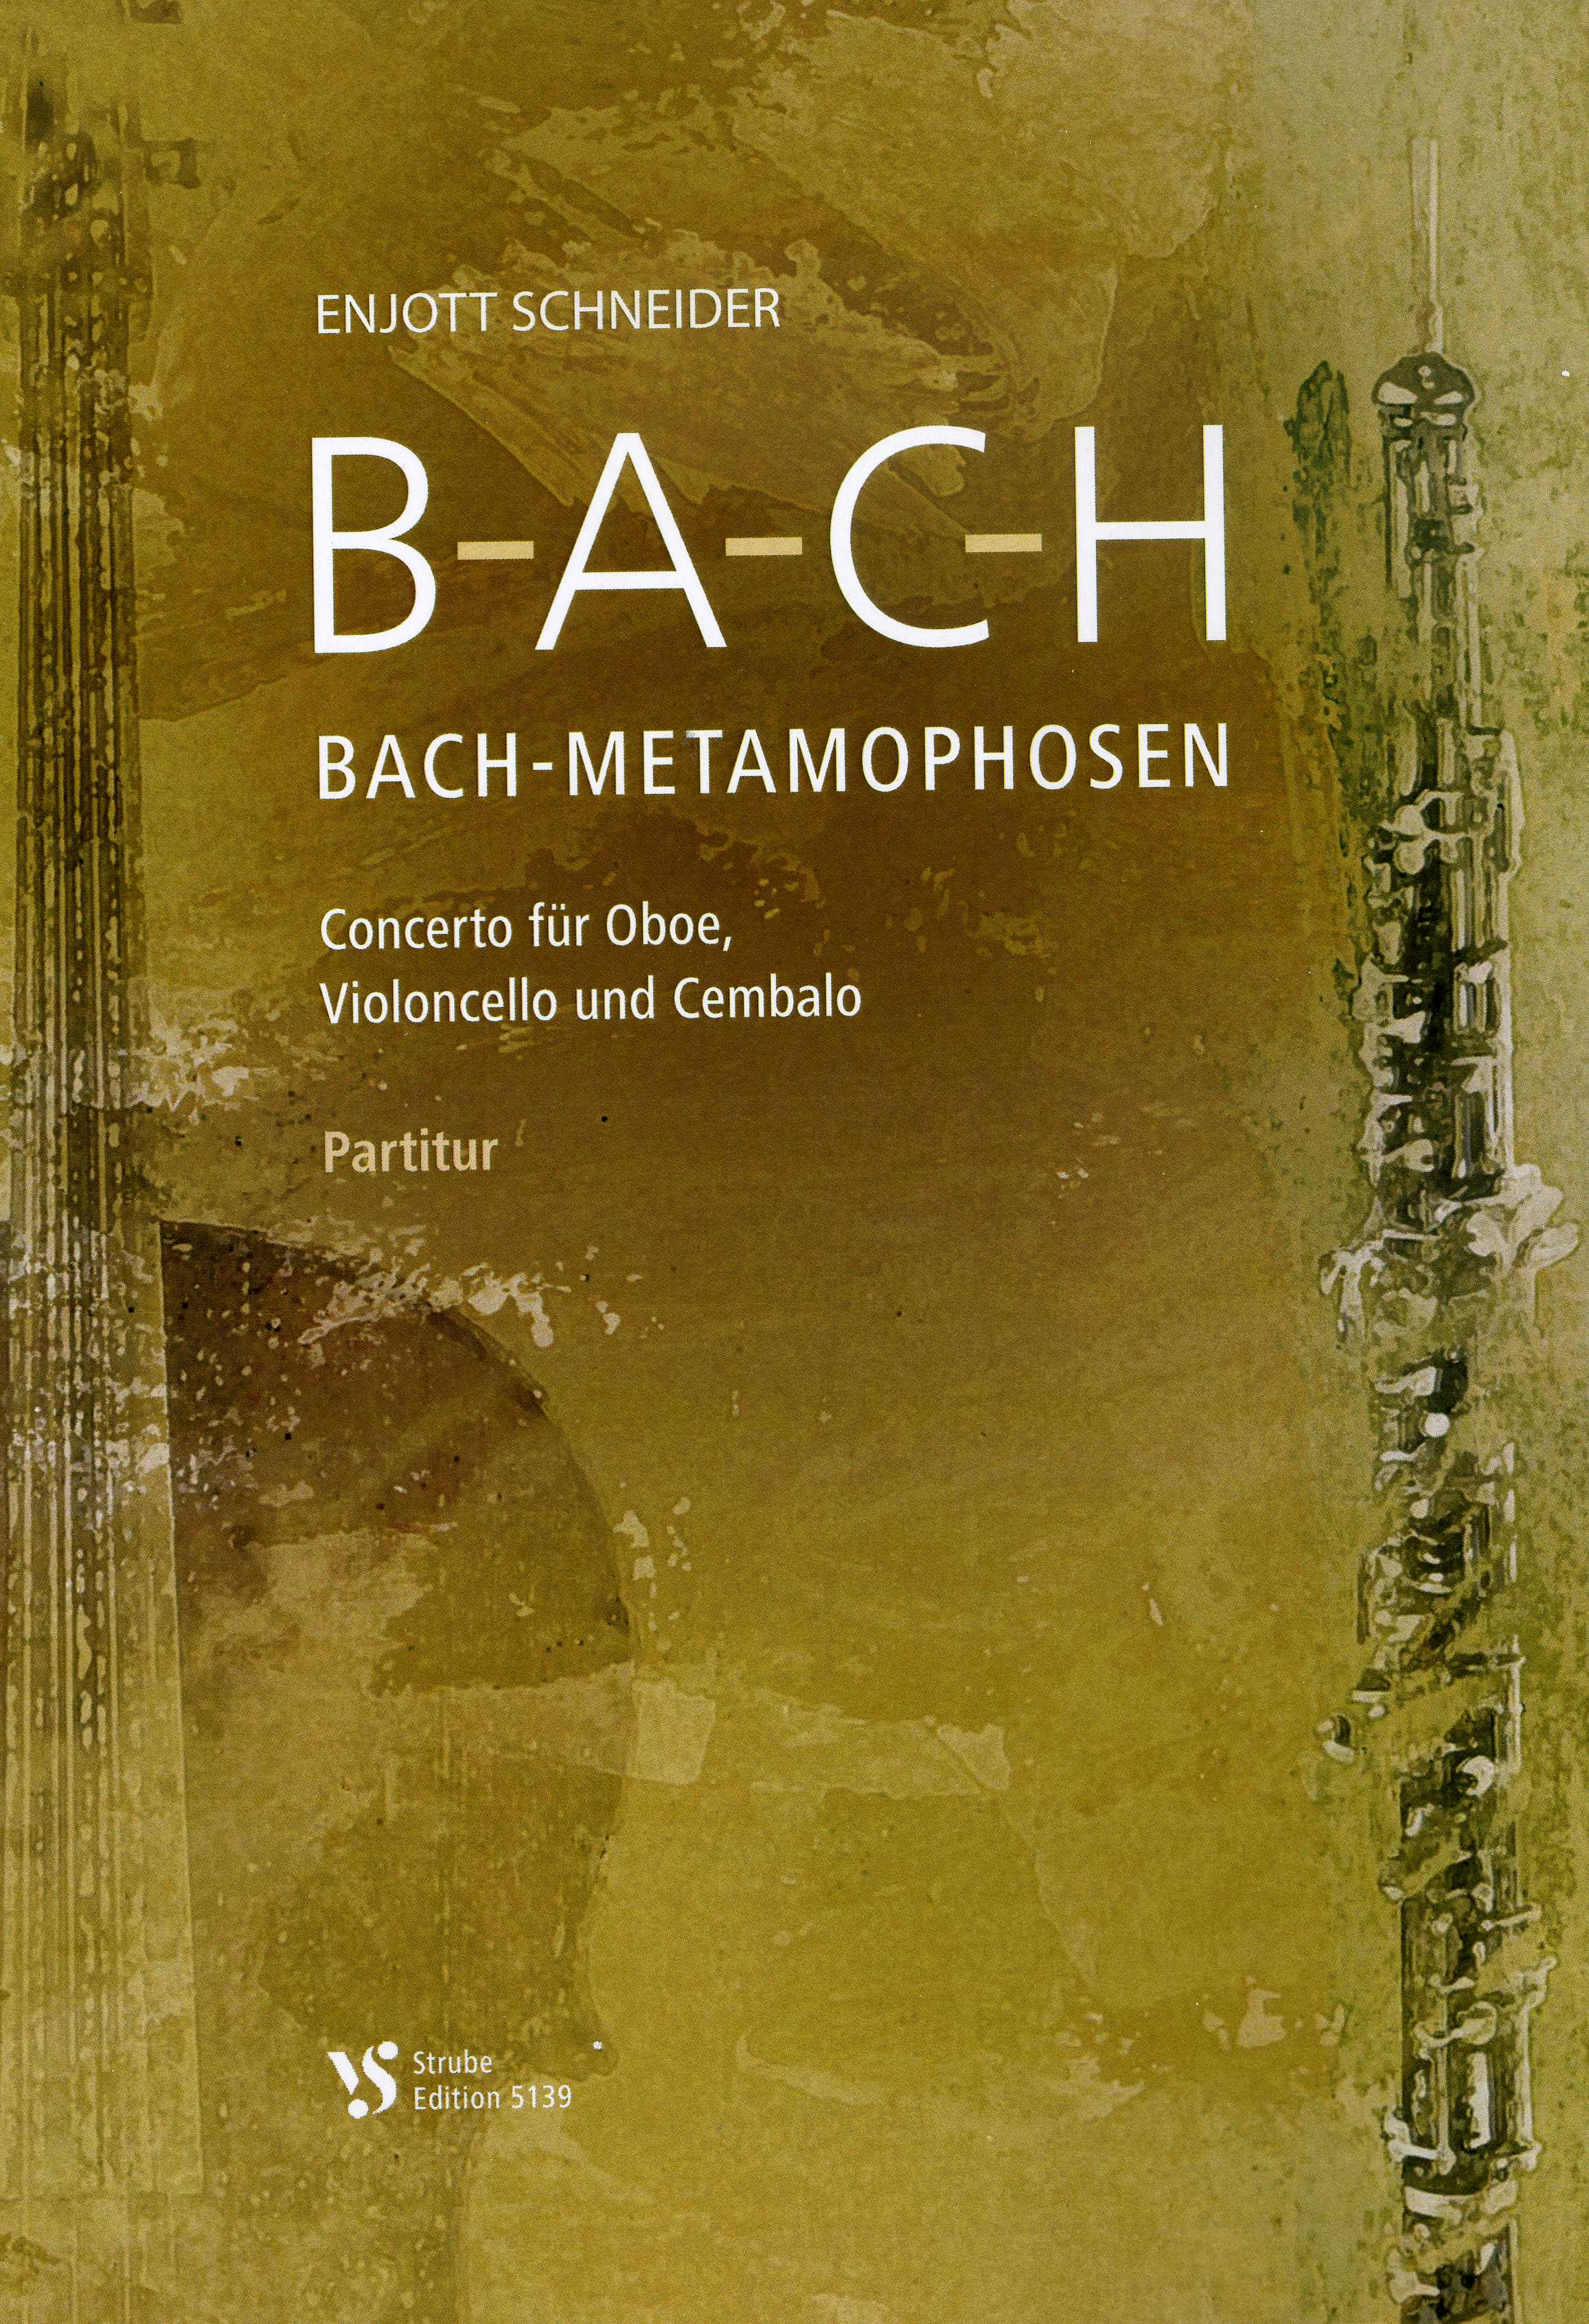 Bach Metamorphosen